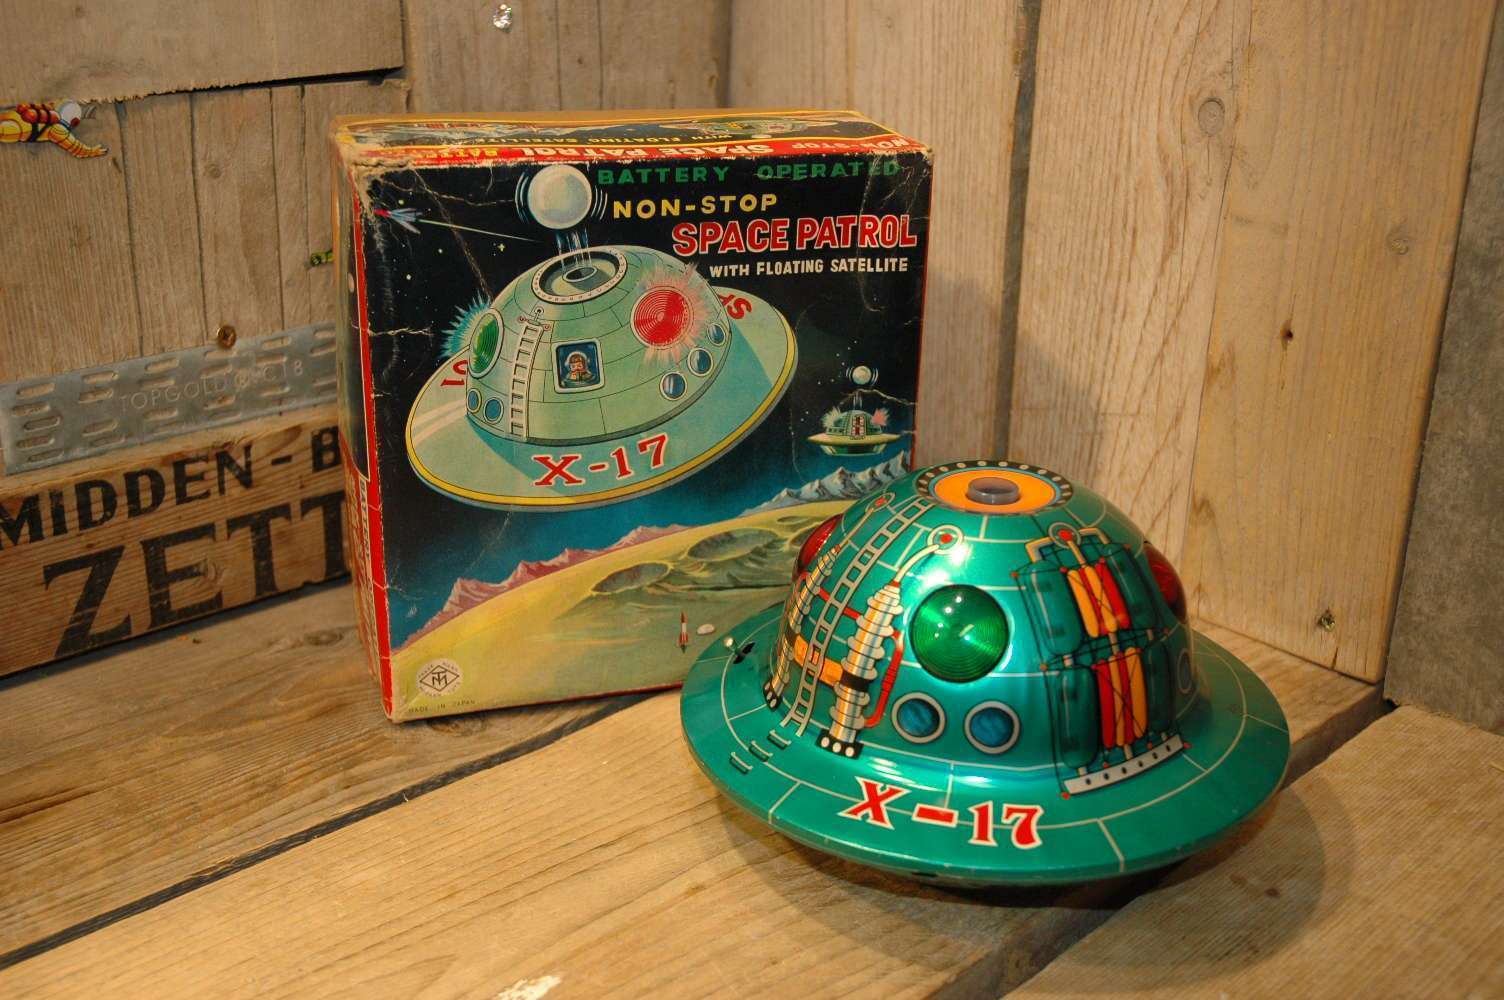 Modern Toys - Non Stop Space Patrol X-17